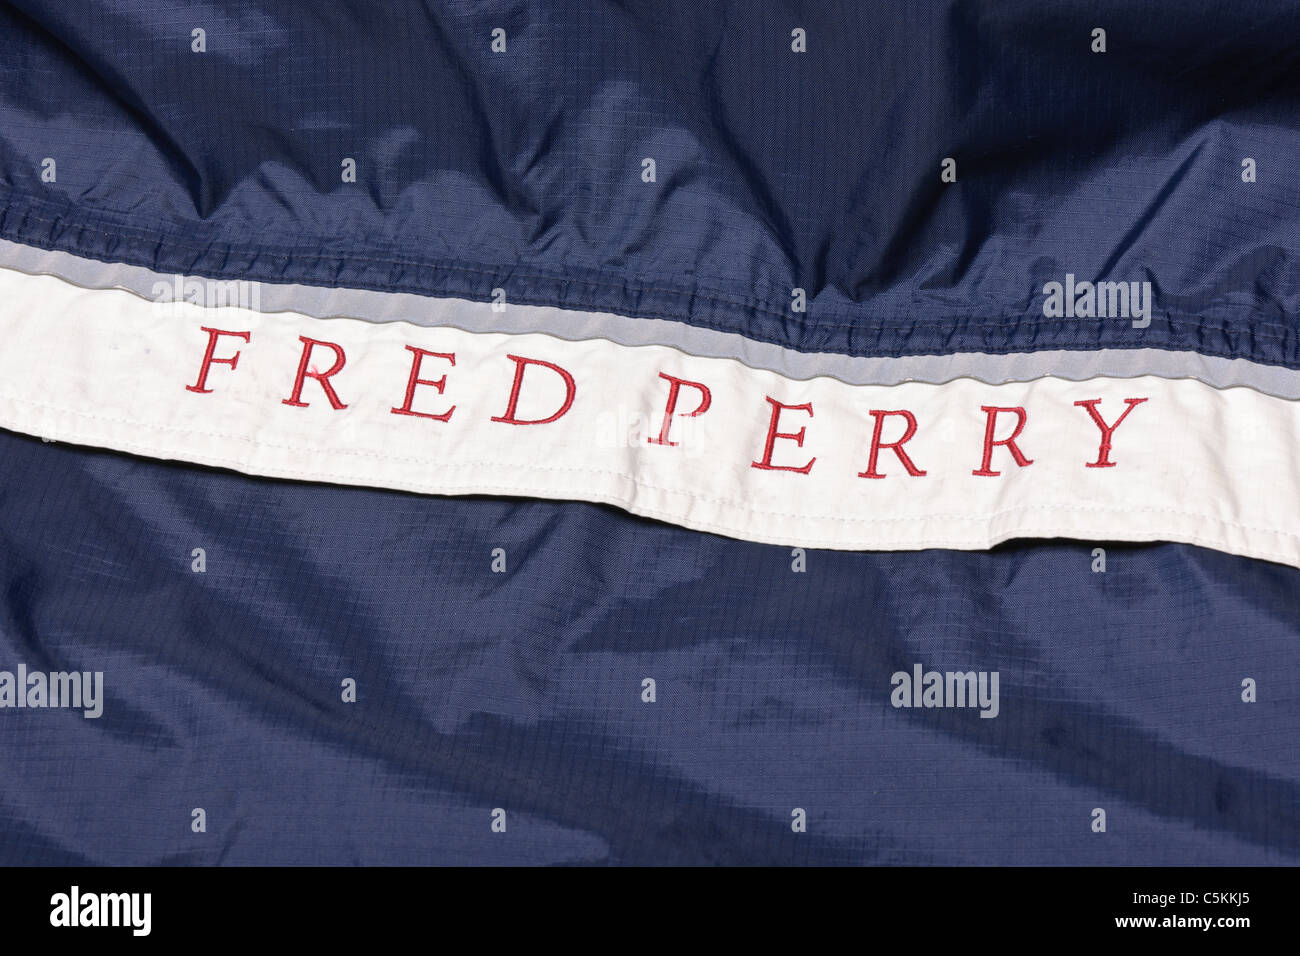 Fred Perry Sportbekleidung Herren Overhead Nylon Regen Jacke Regenjacke.  Logo-Details Stockfotografie - Alamy